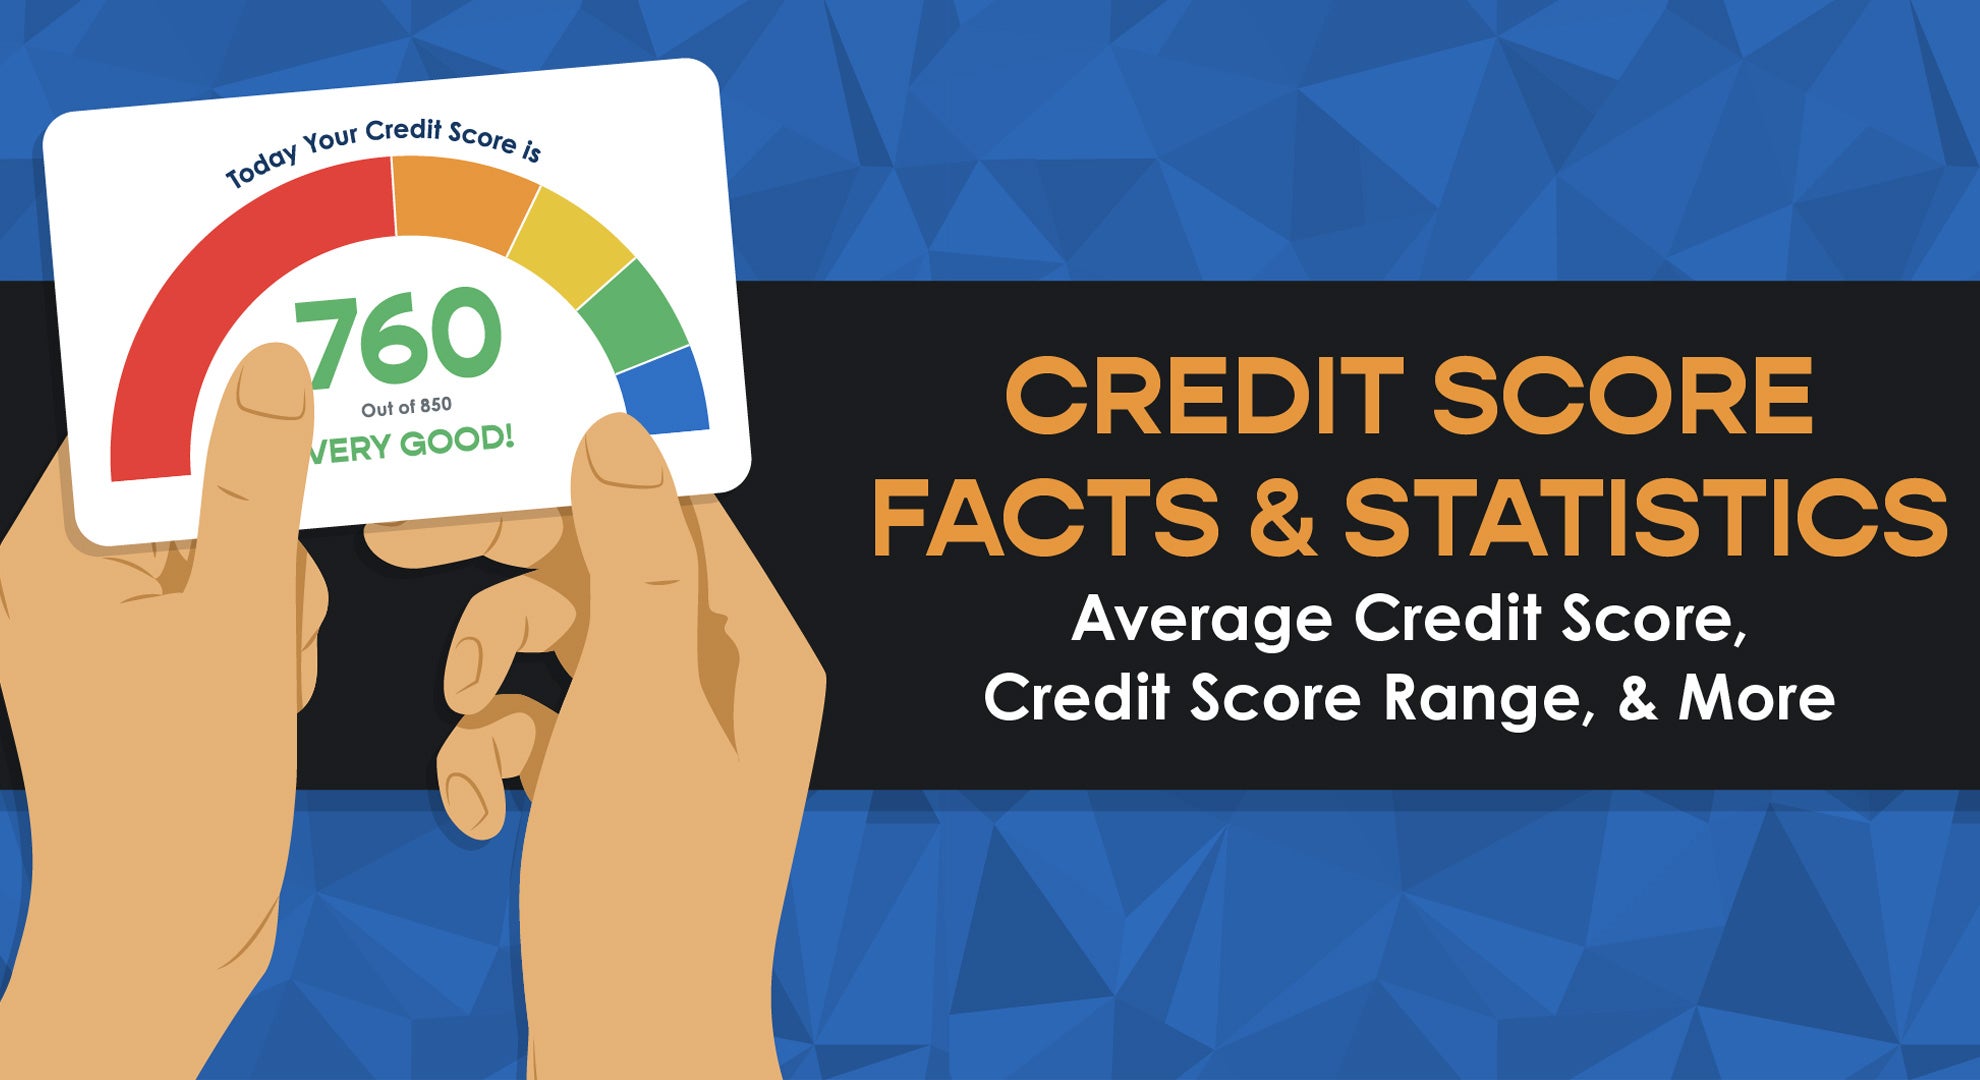 Credit Score Statistics Featured Image RESIZED